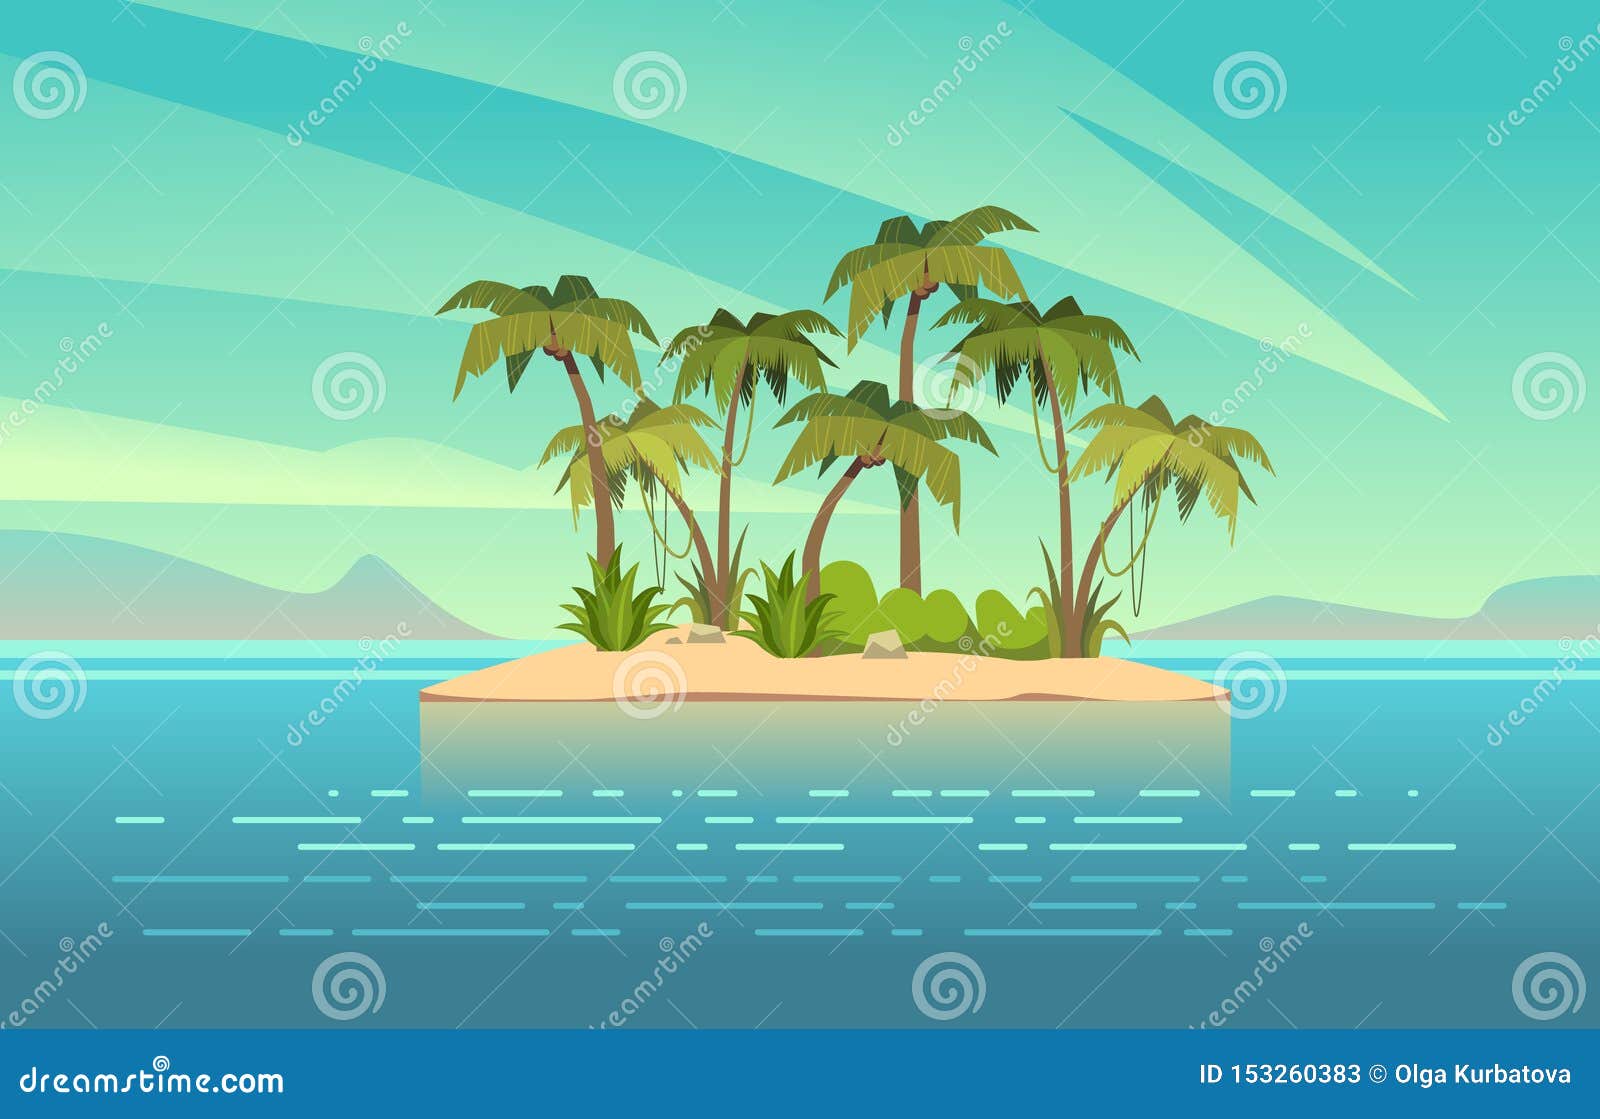 ocean island cartoon. tropical island with palm trees summer landscape. sand beach and sun in blue sky. travel vacation